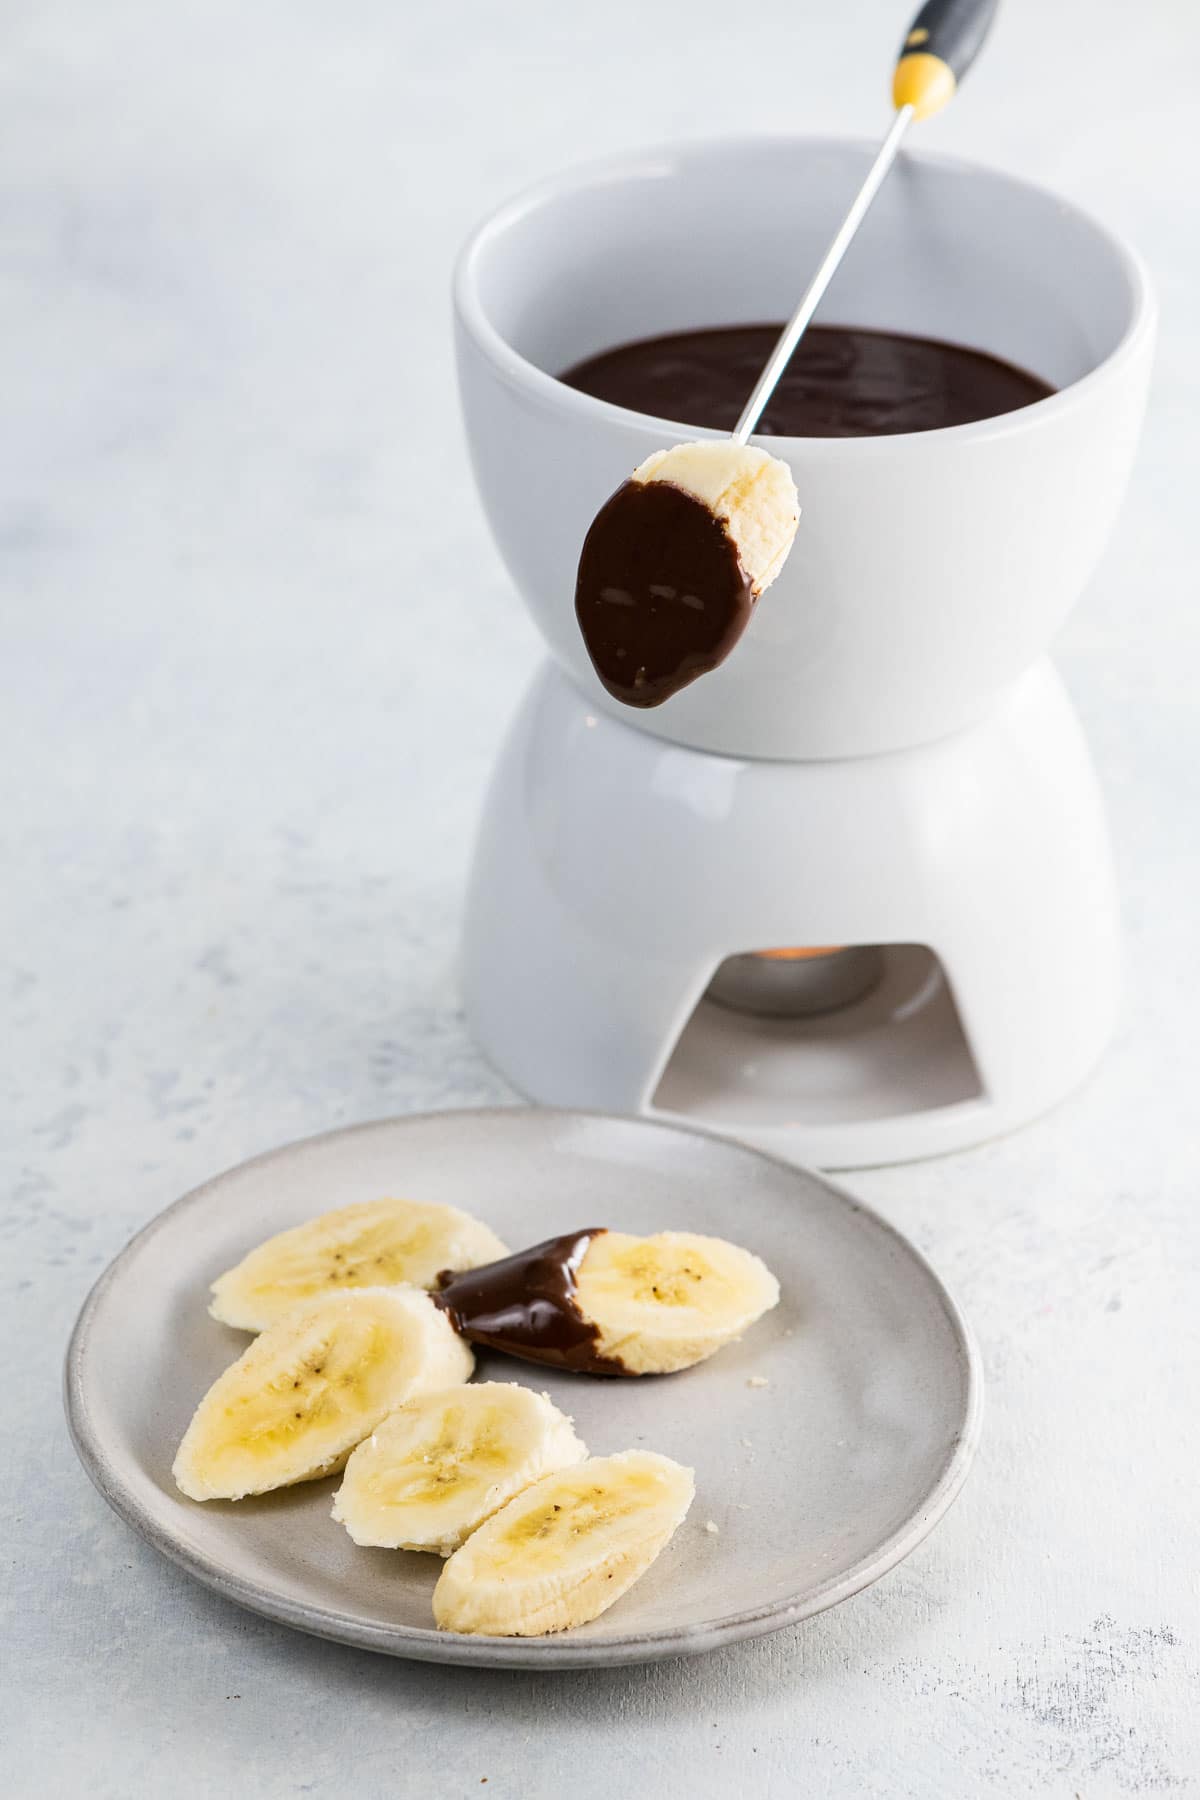 chocolate fondue with banana slices